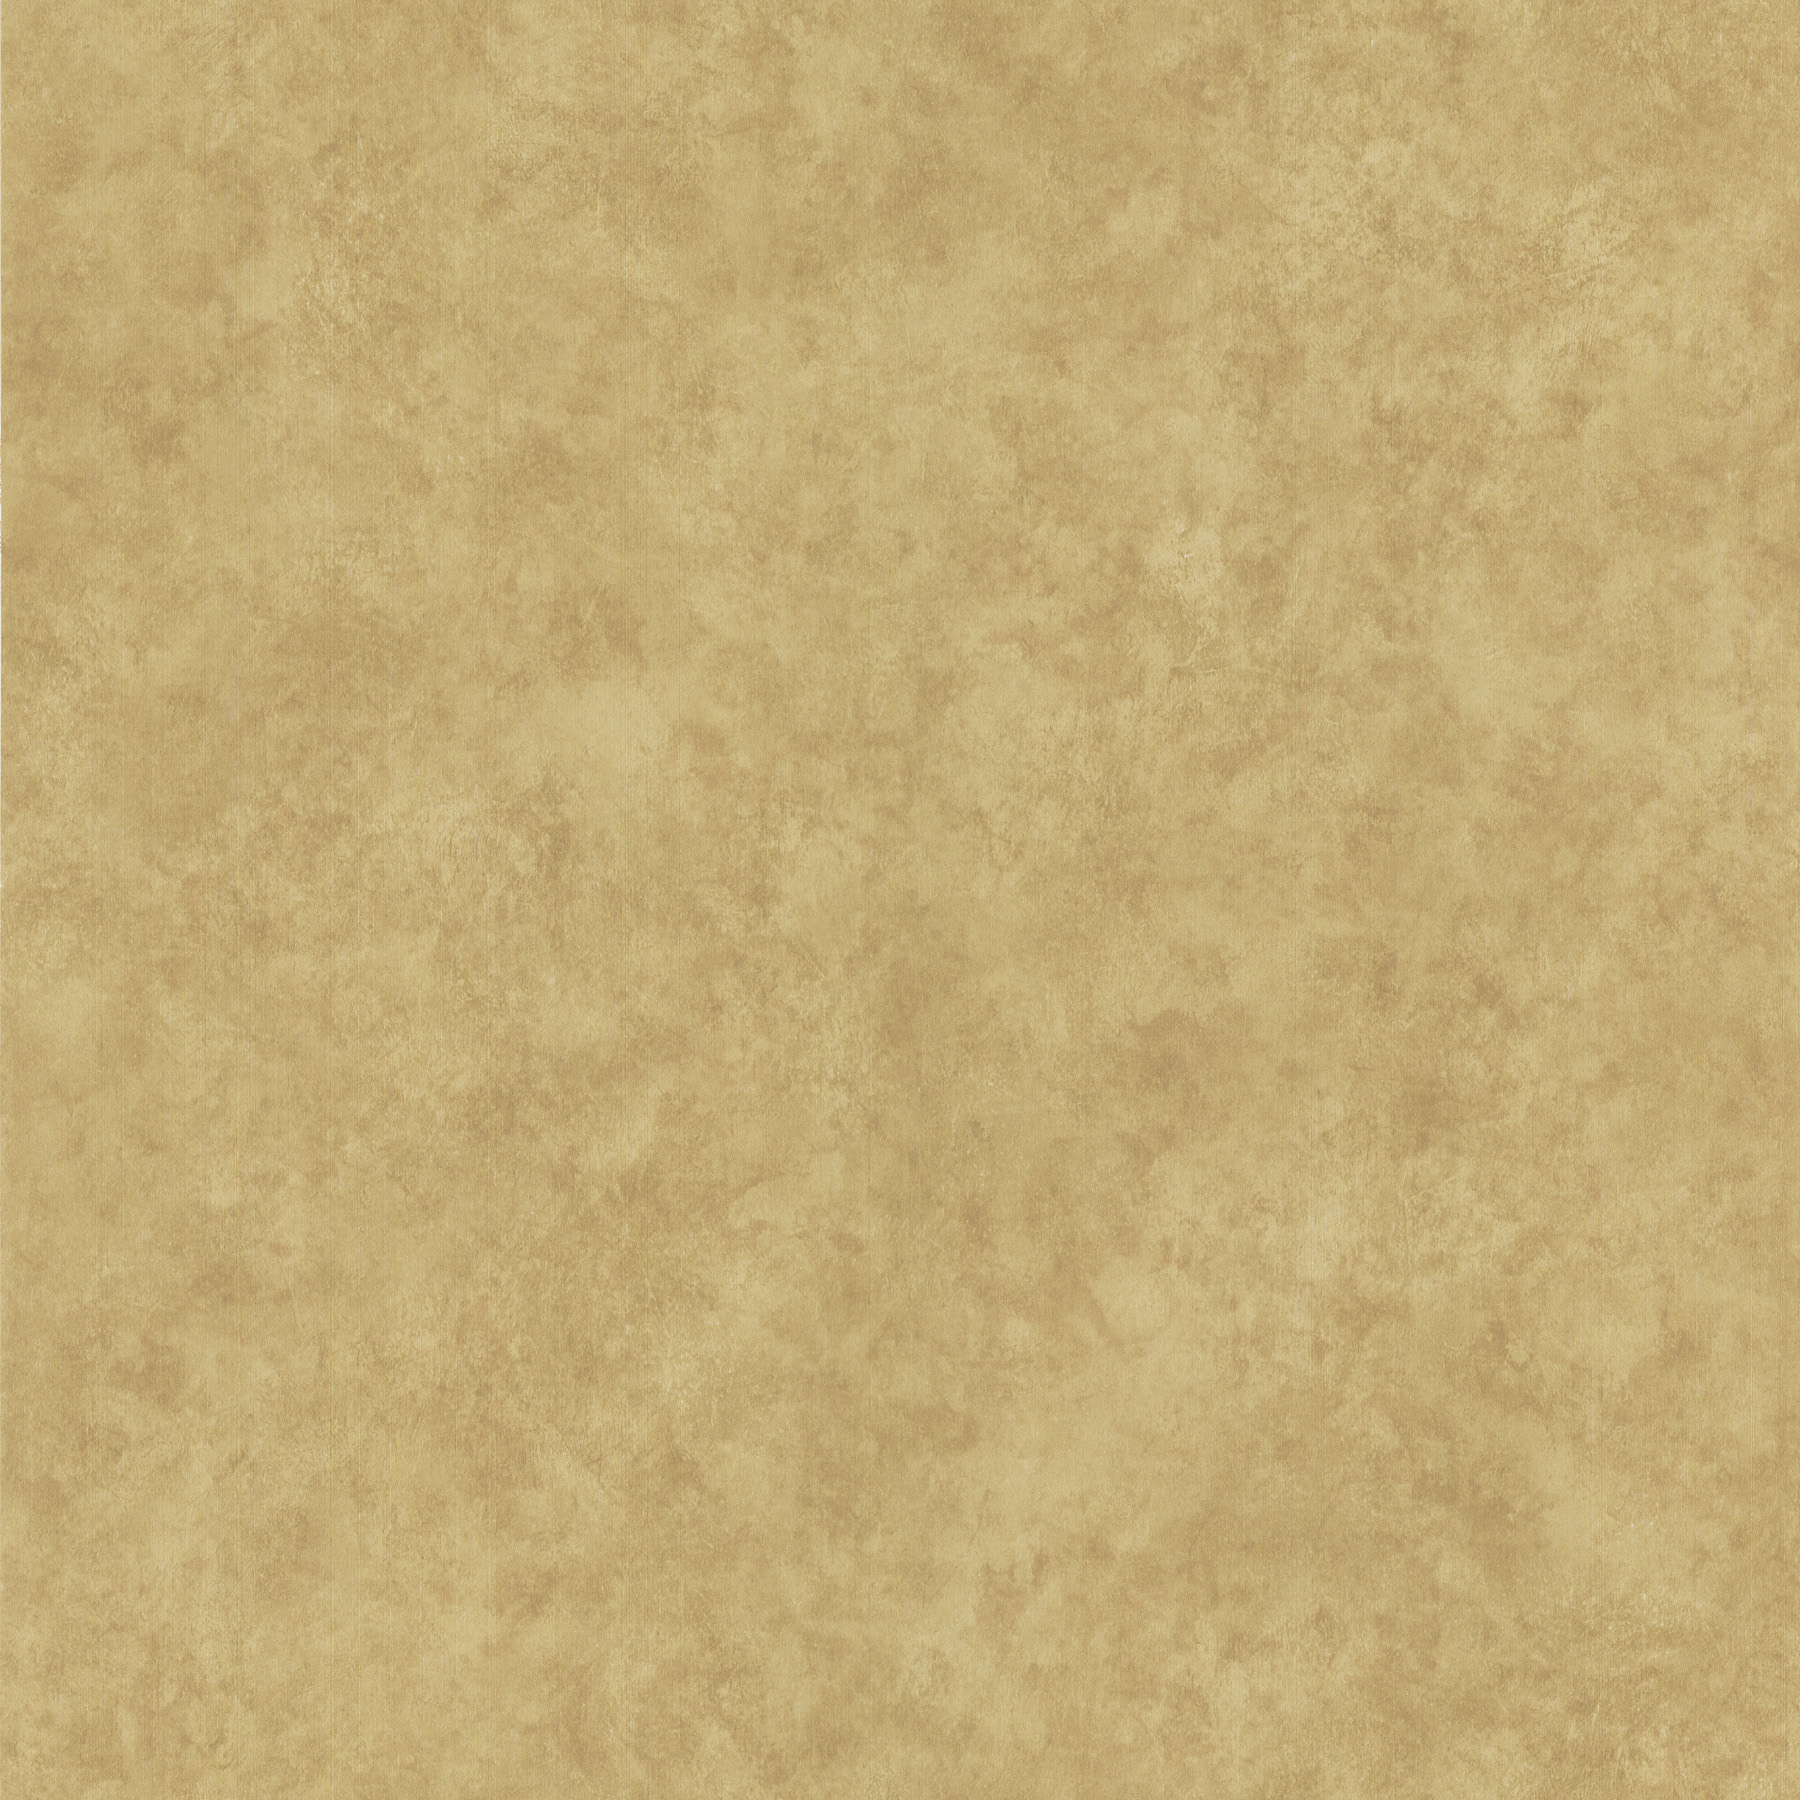 plain wallpaper for walls,brown,beige,flooring,floor,tile